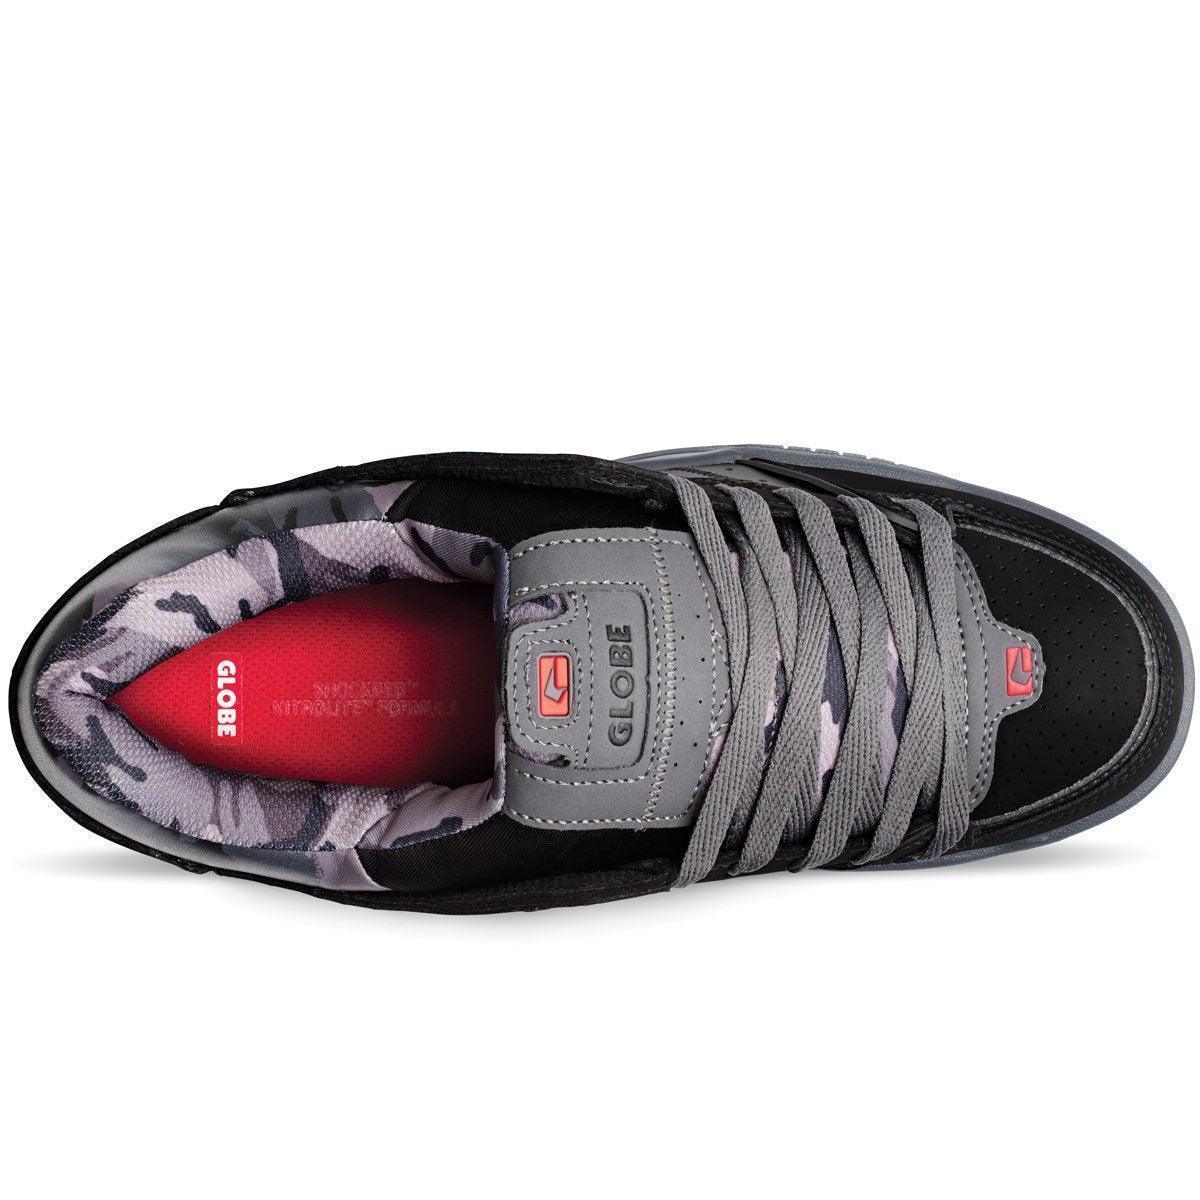 Globe Men's Fushion Skate Shoes - A&M Clothing & Shoes